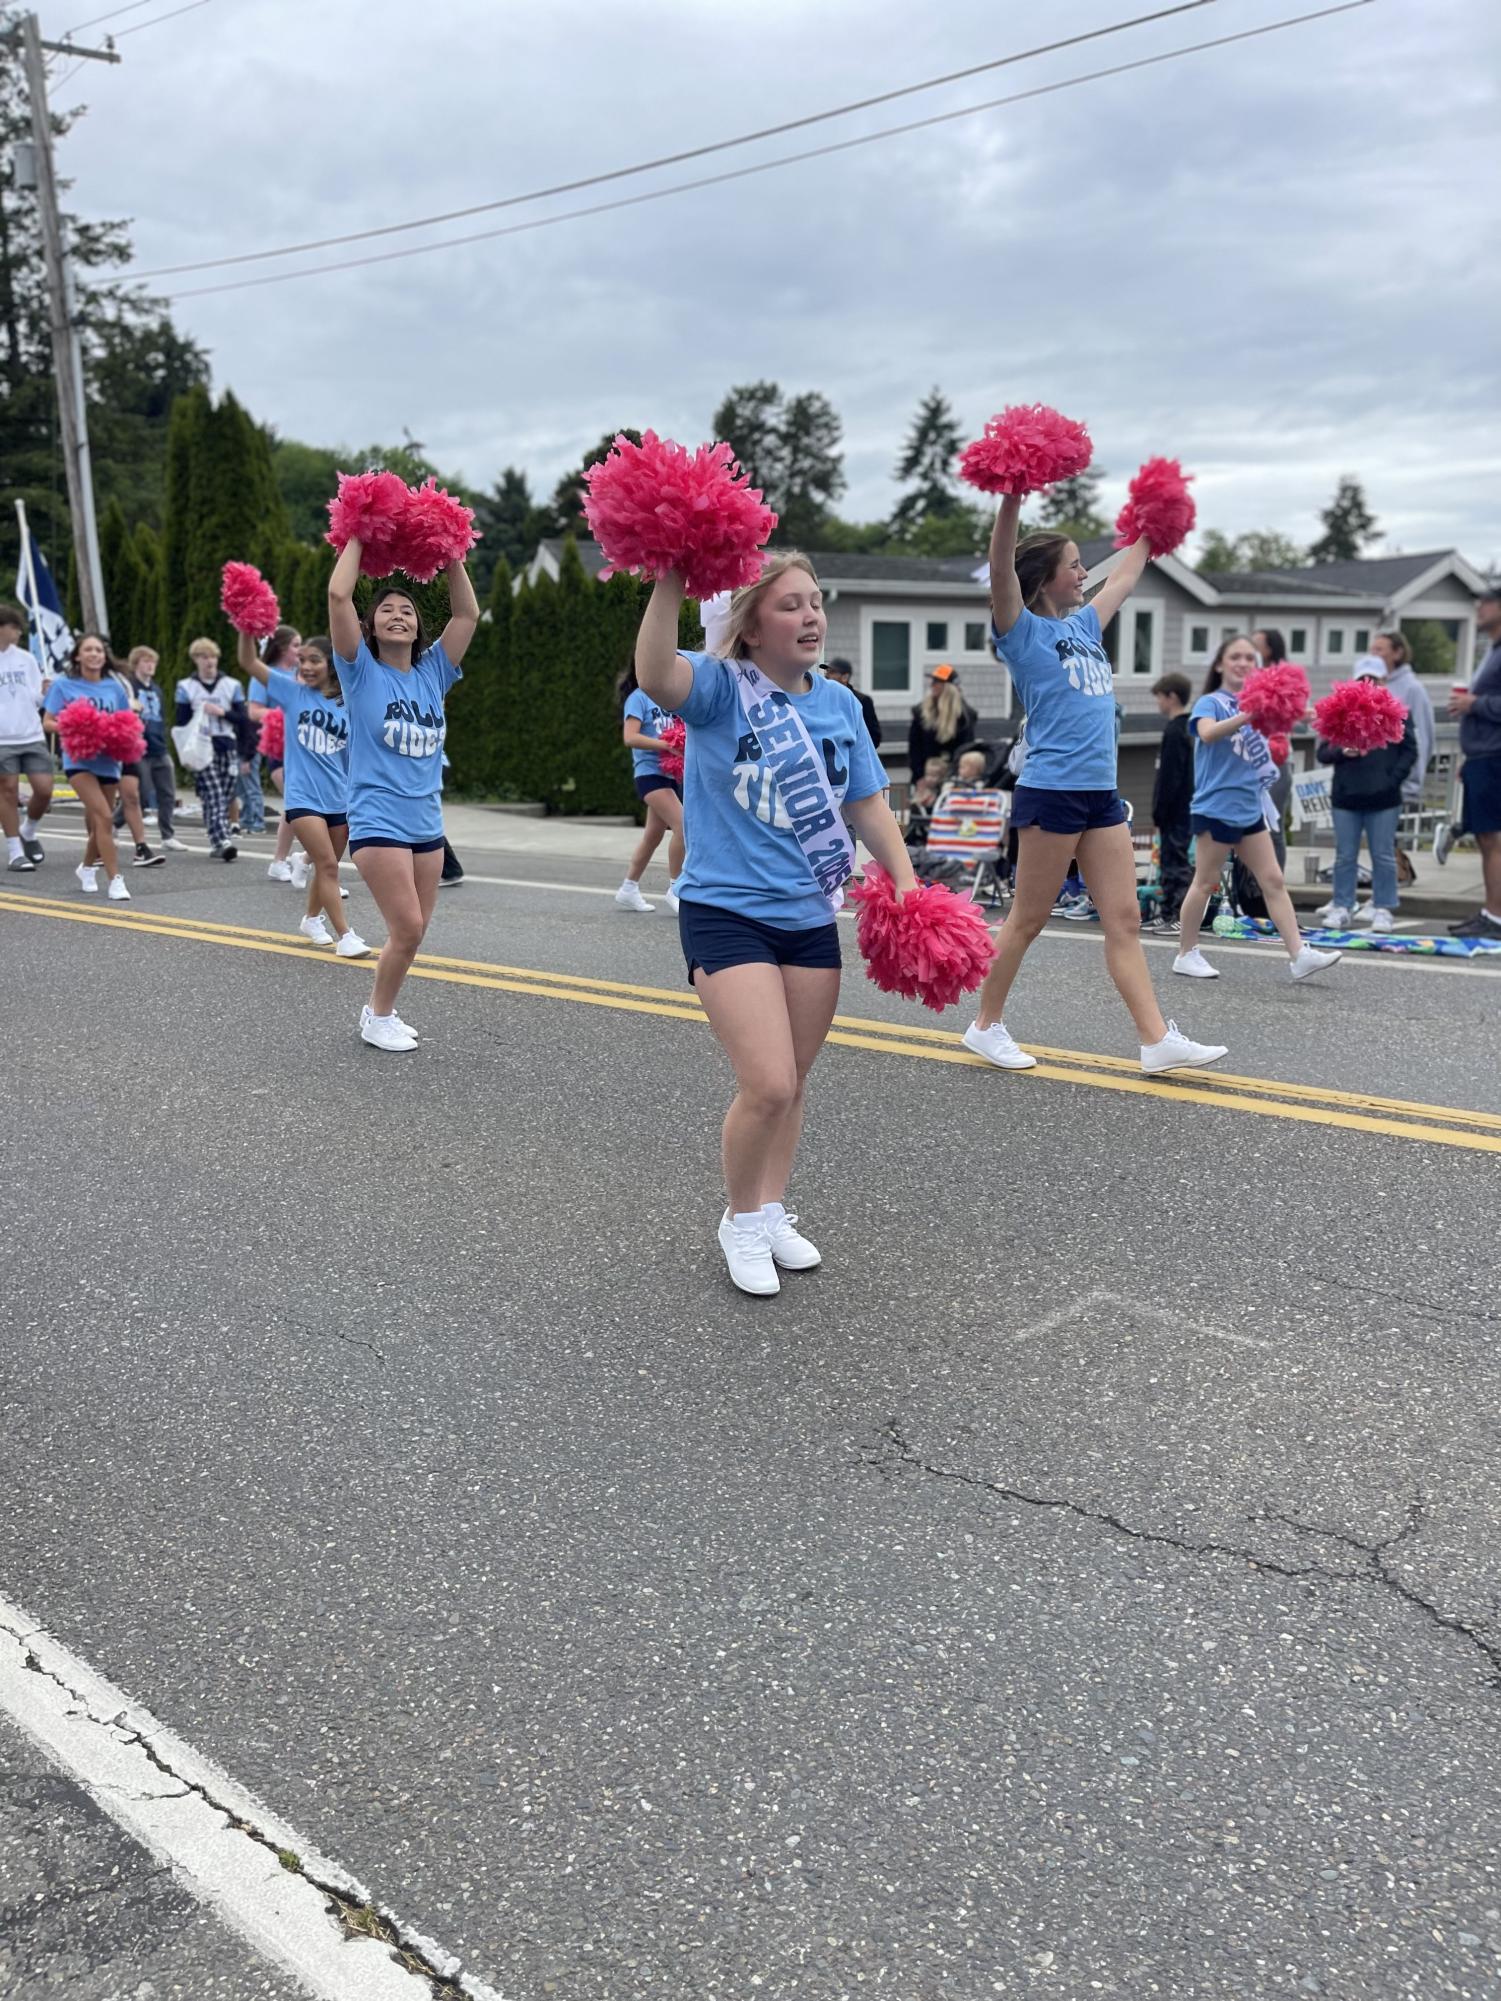 Cheerleaders wave pink pom-poms